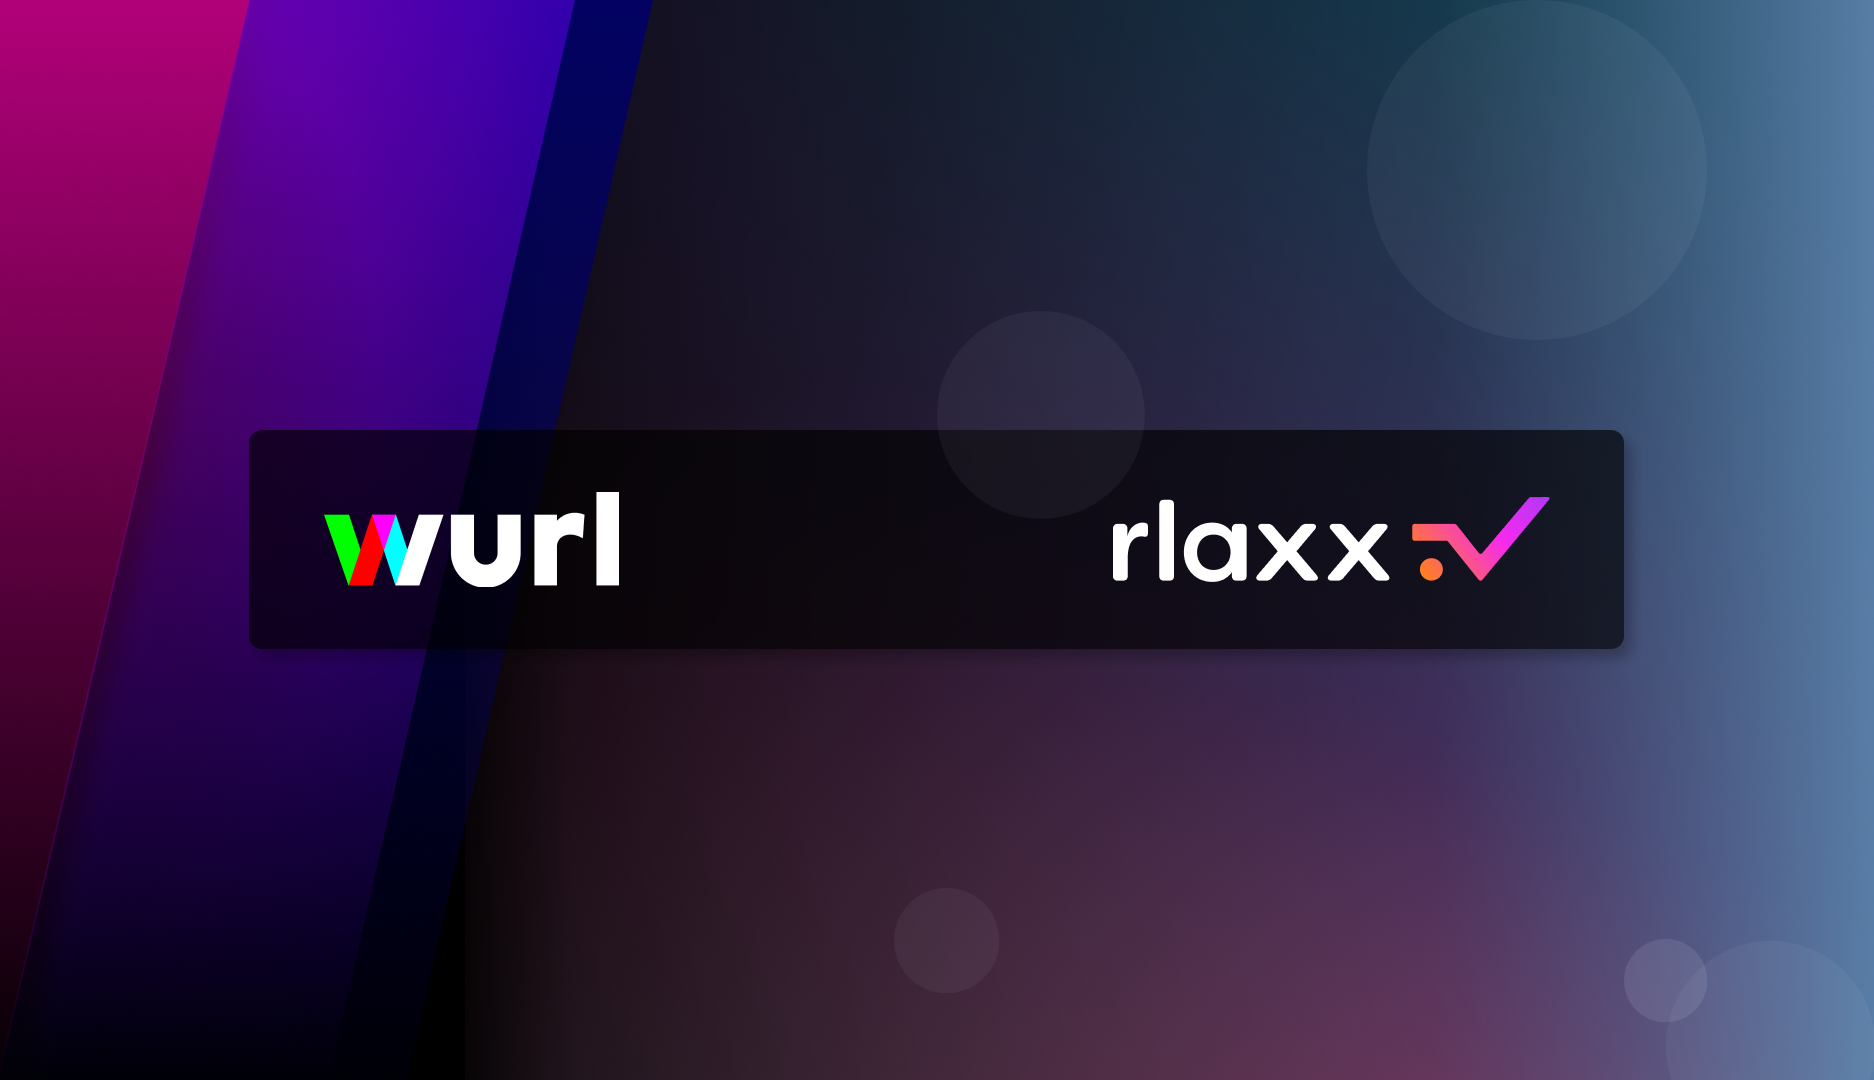 rlaxx TV